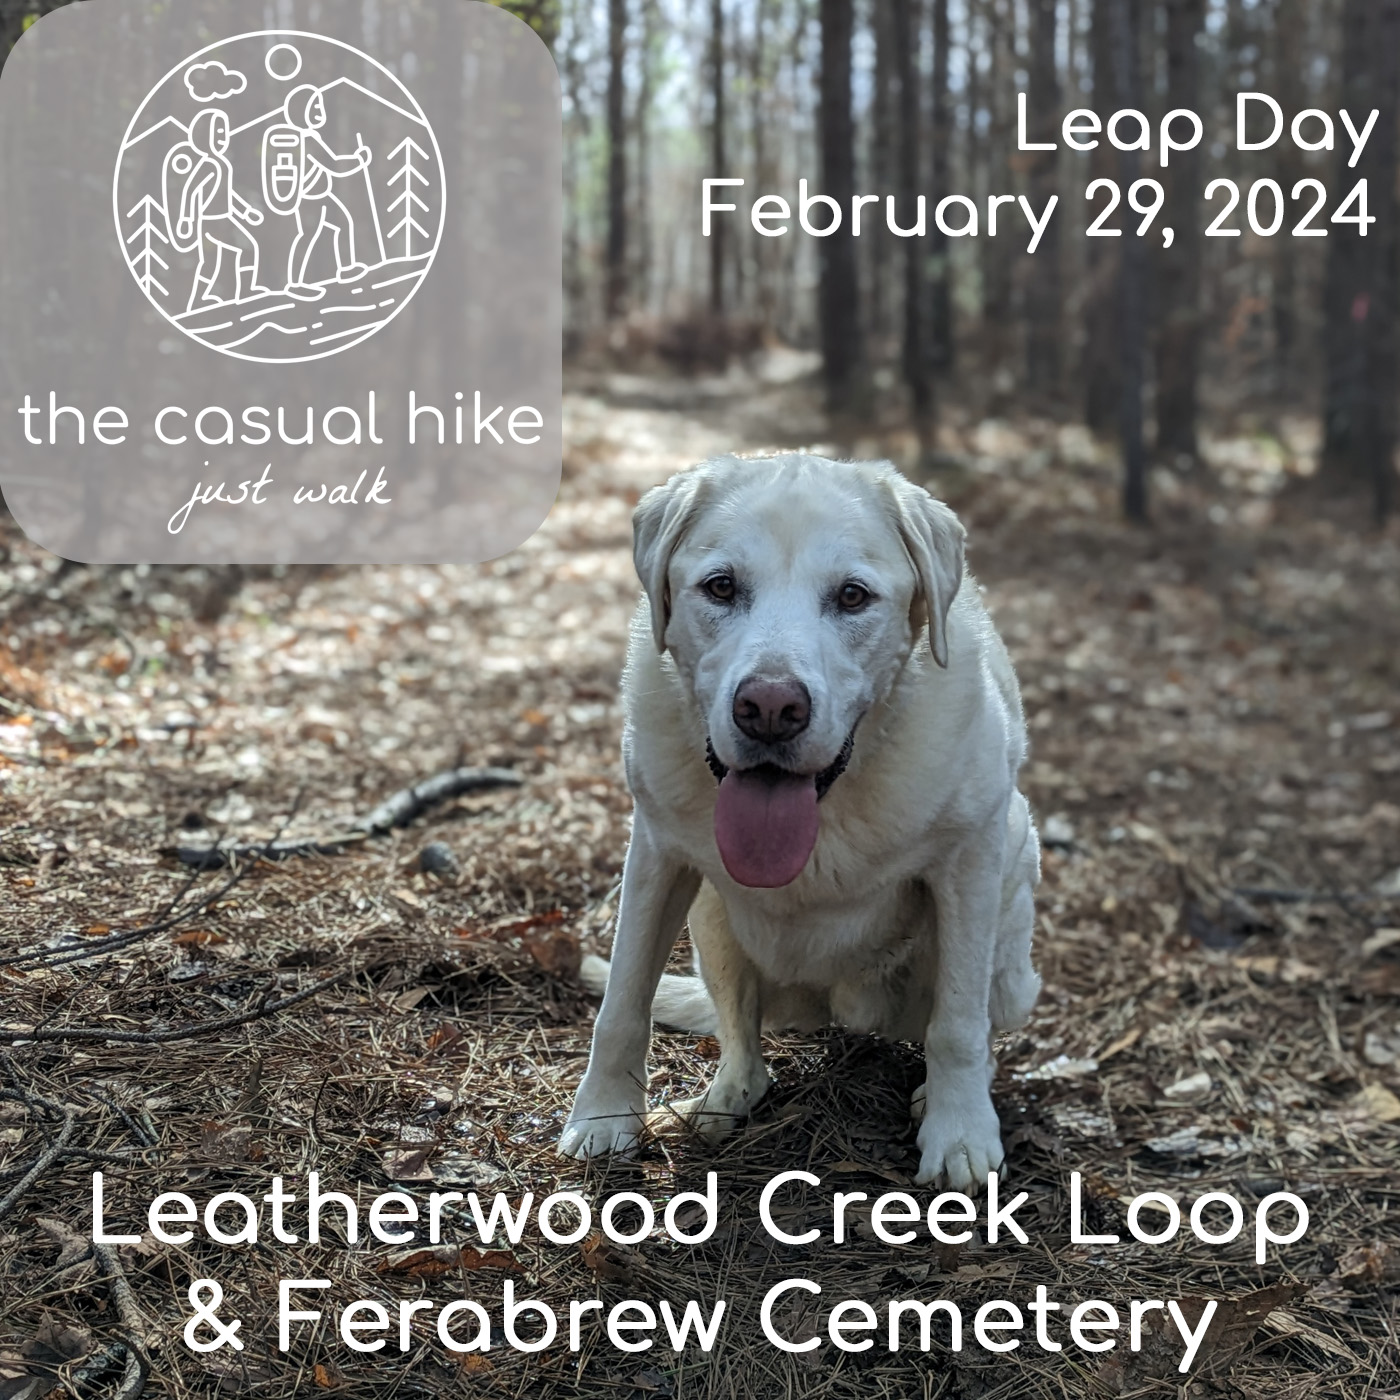 Leap Day at Leatherwood Creek Loop, Toccoa, GA.